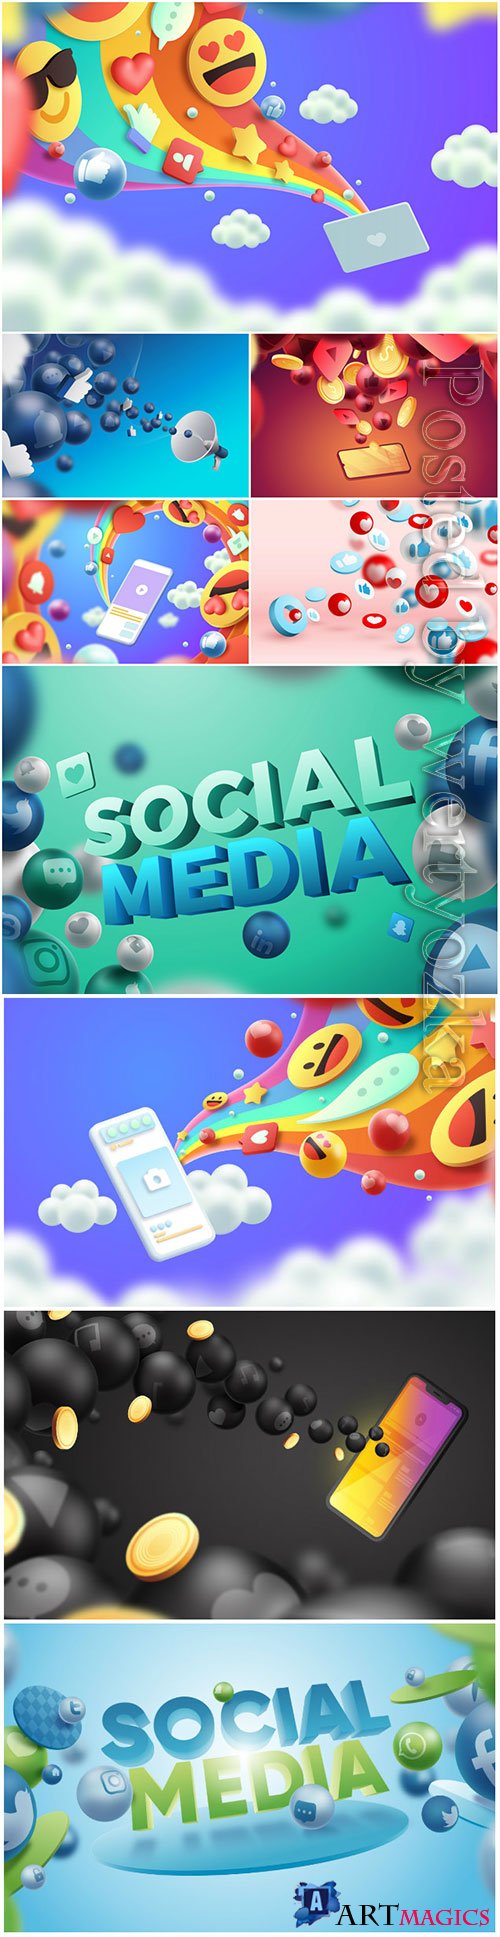 Social media 3d vector background